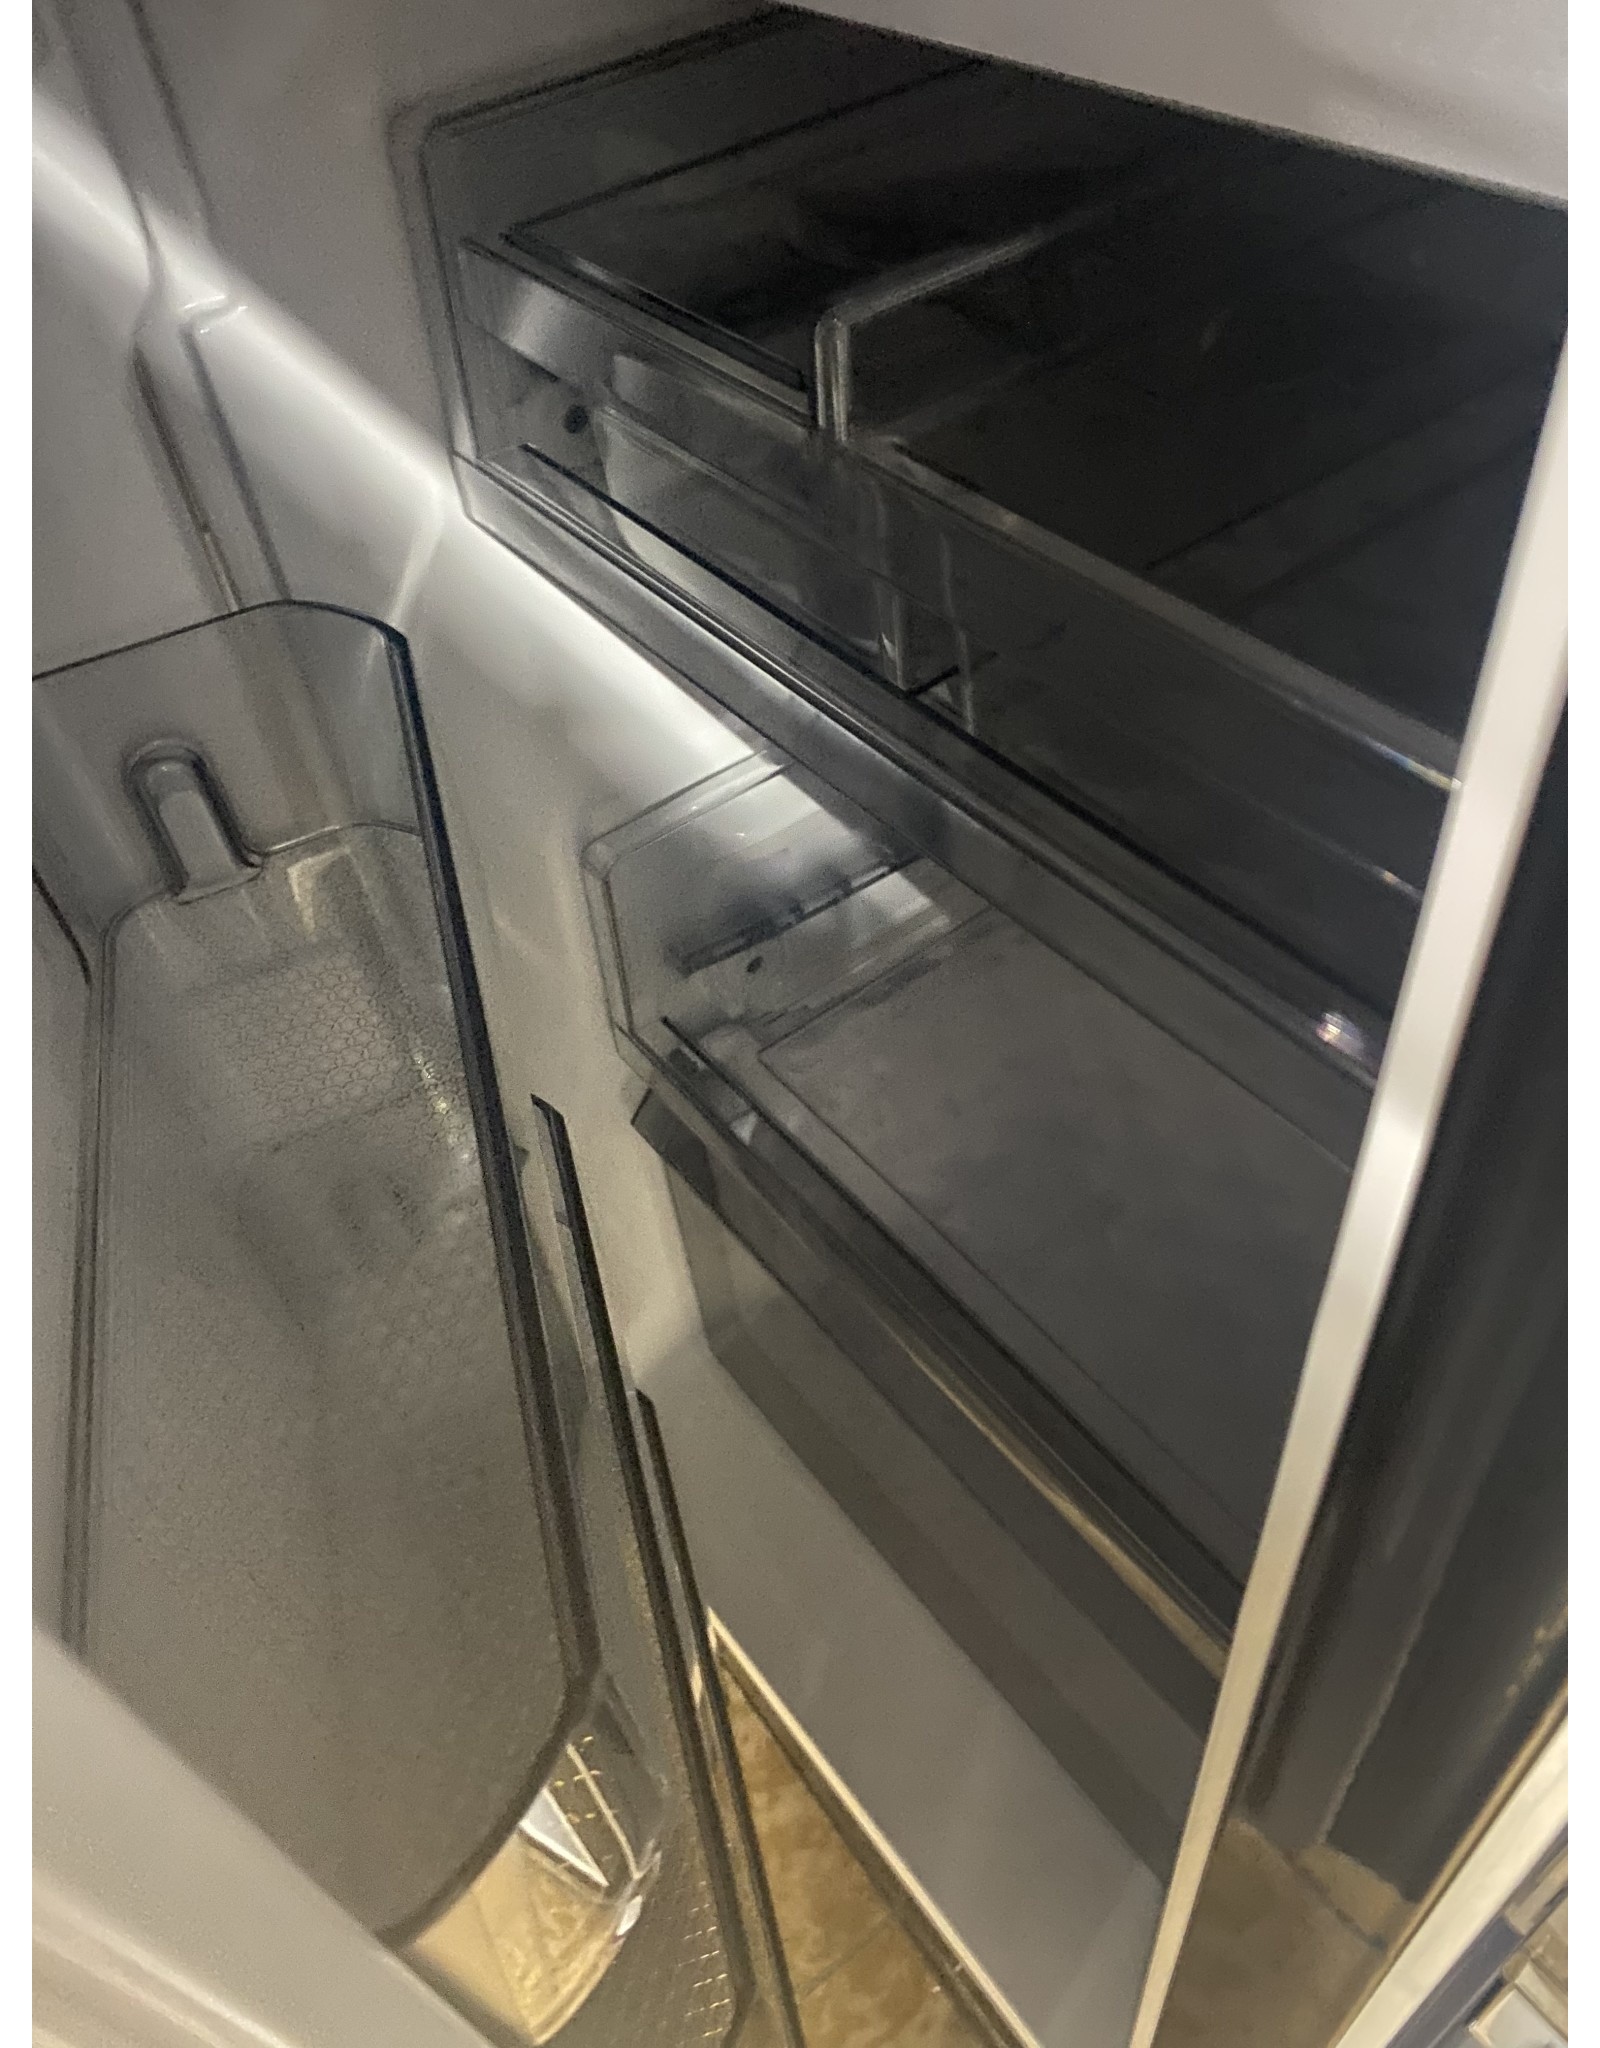 SAMSUNG RF23A9071SG 23 cu. ft. 4-Door Flex French Door Refrigerator in Fingerprint Resistant Black Stainless, Counter Depth